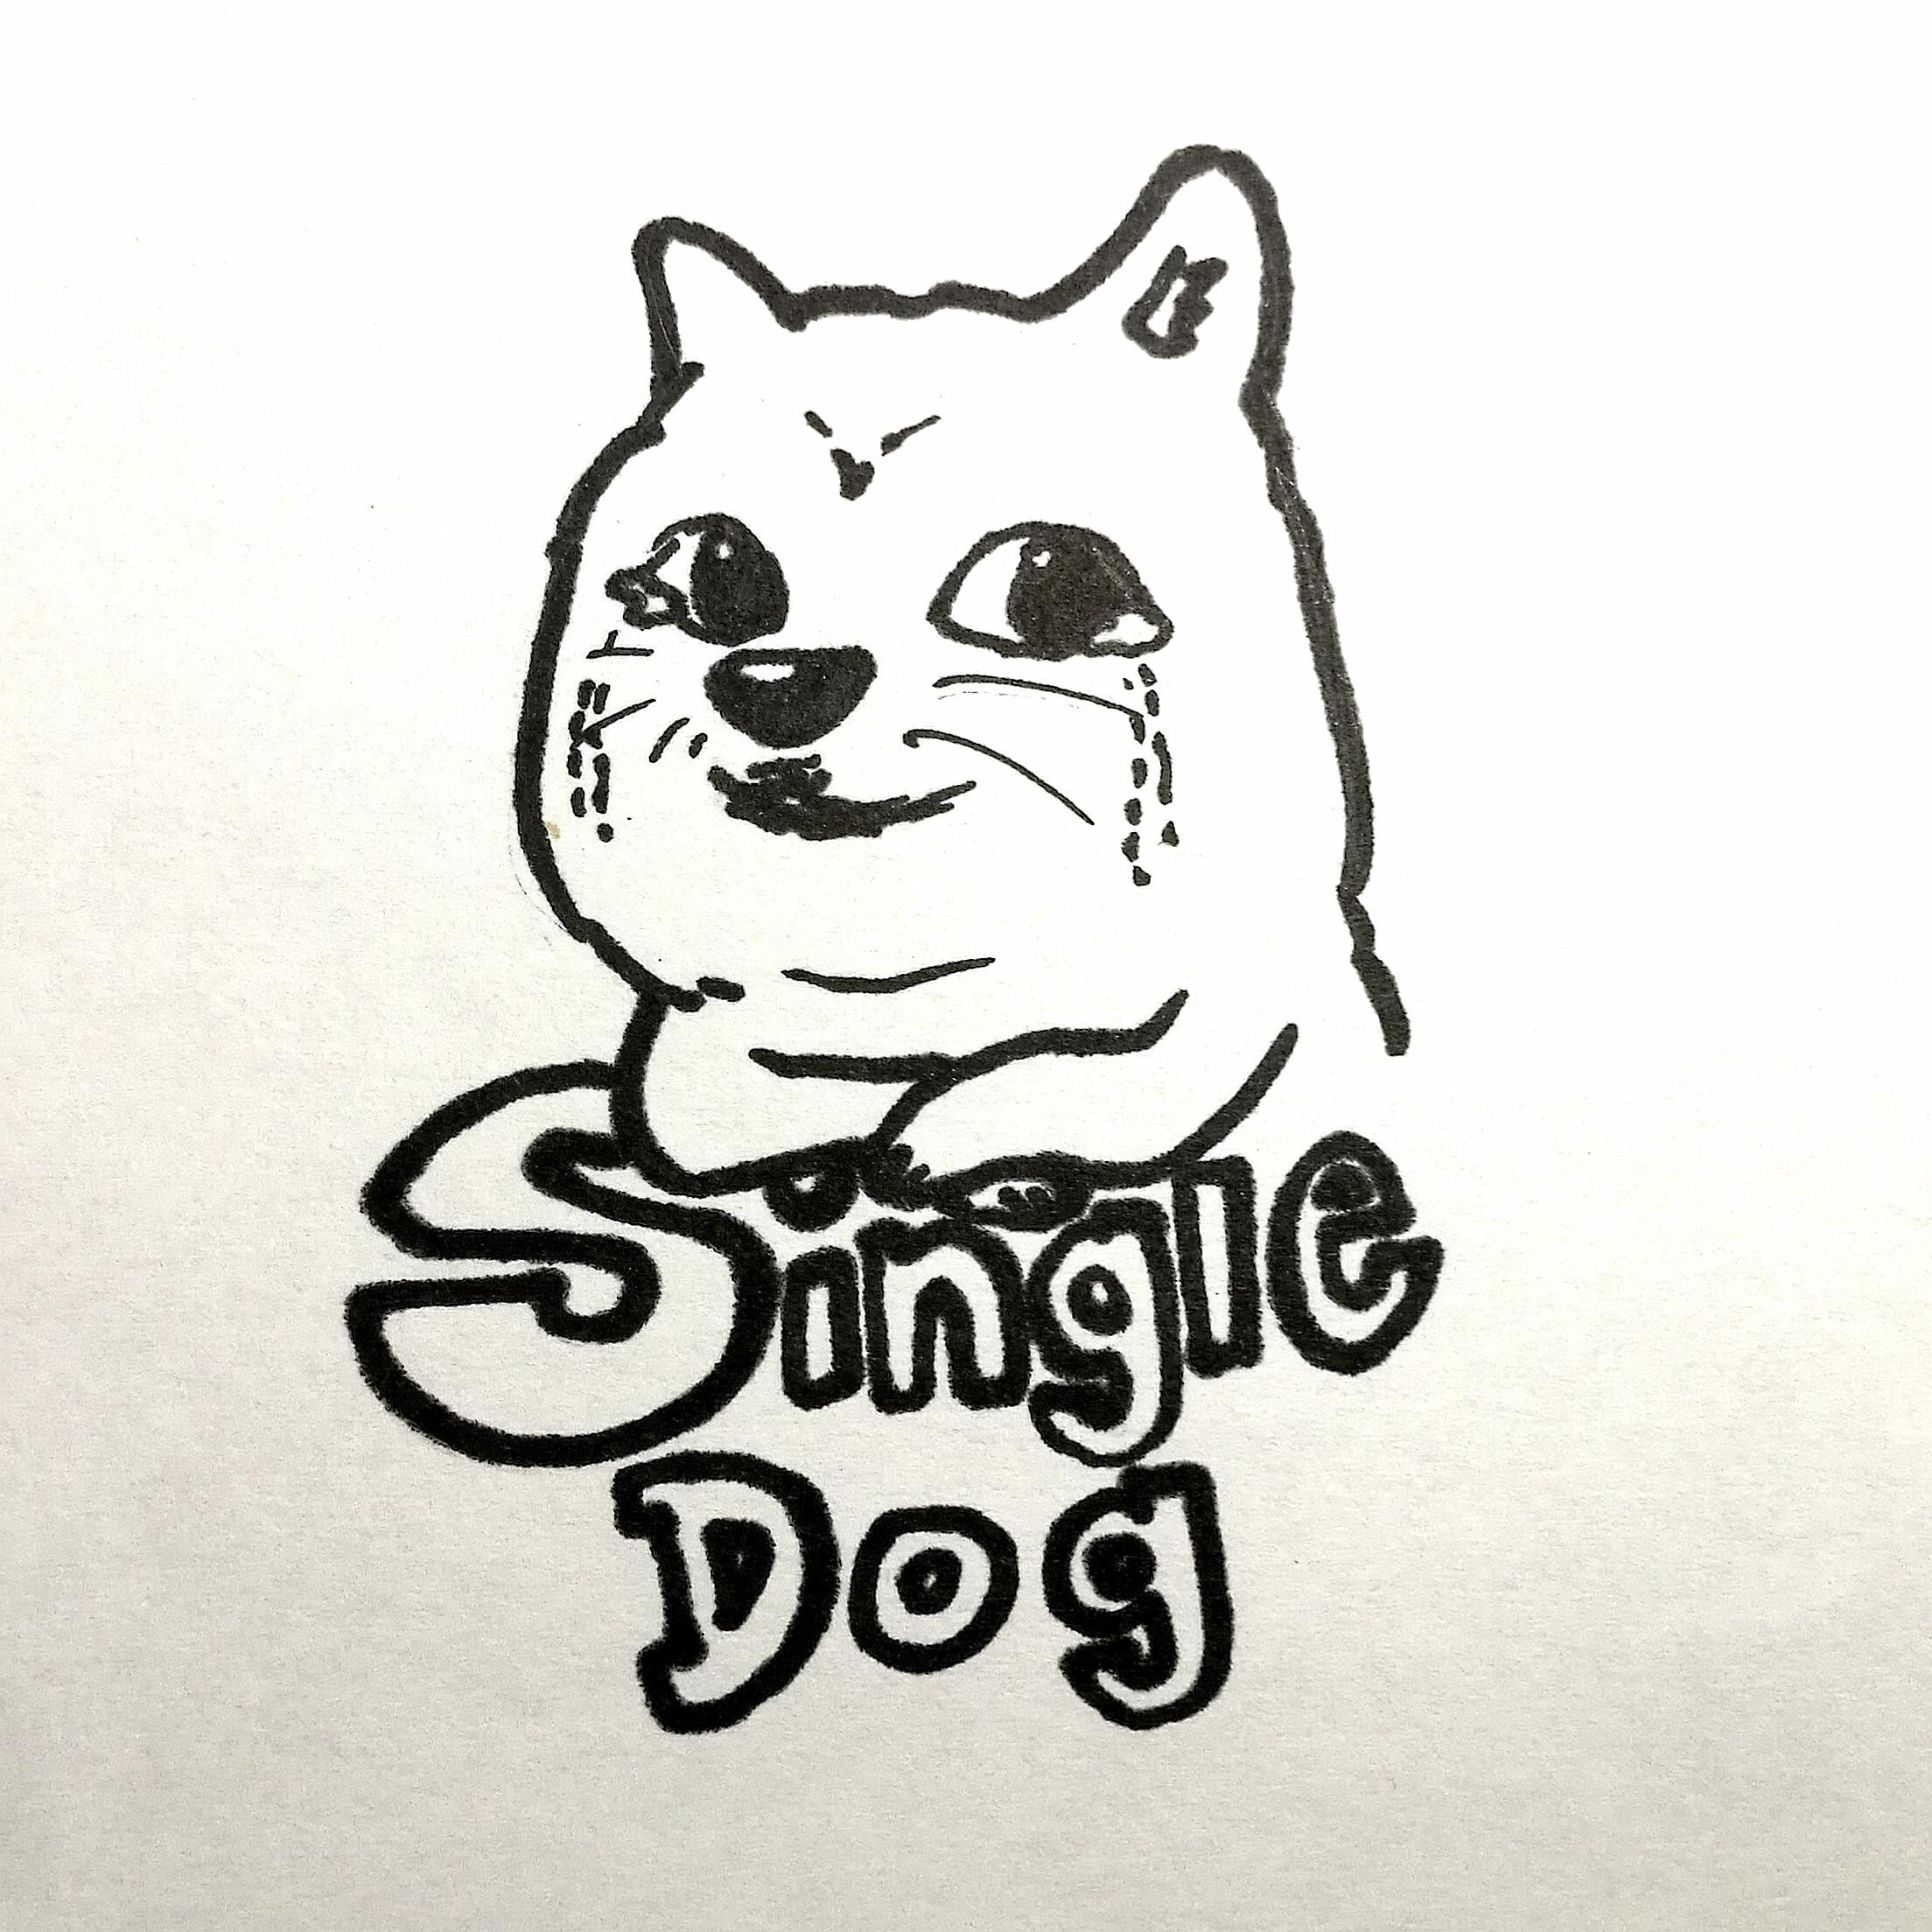 single dog(现在是完整版了!